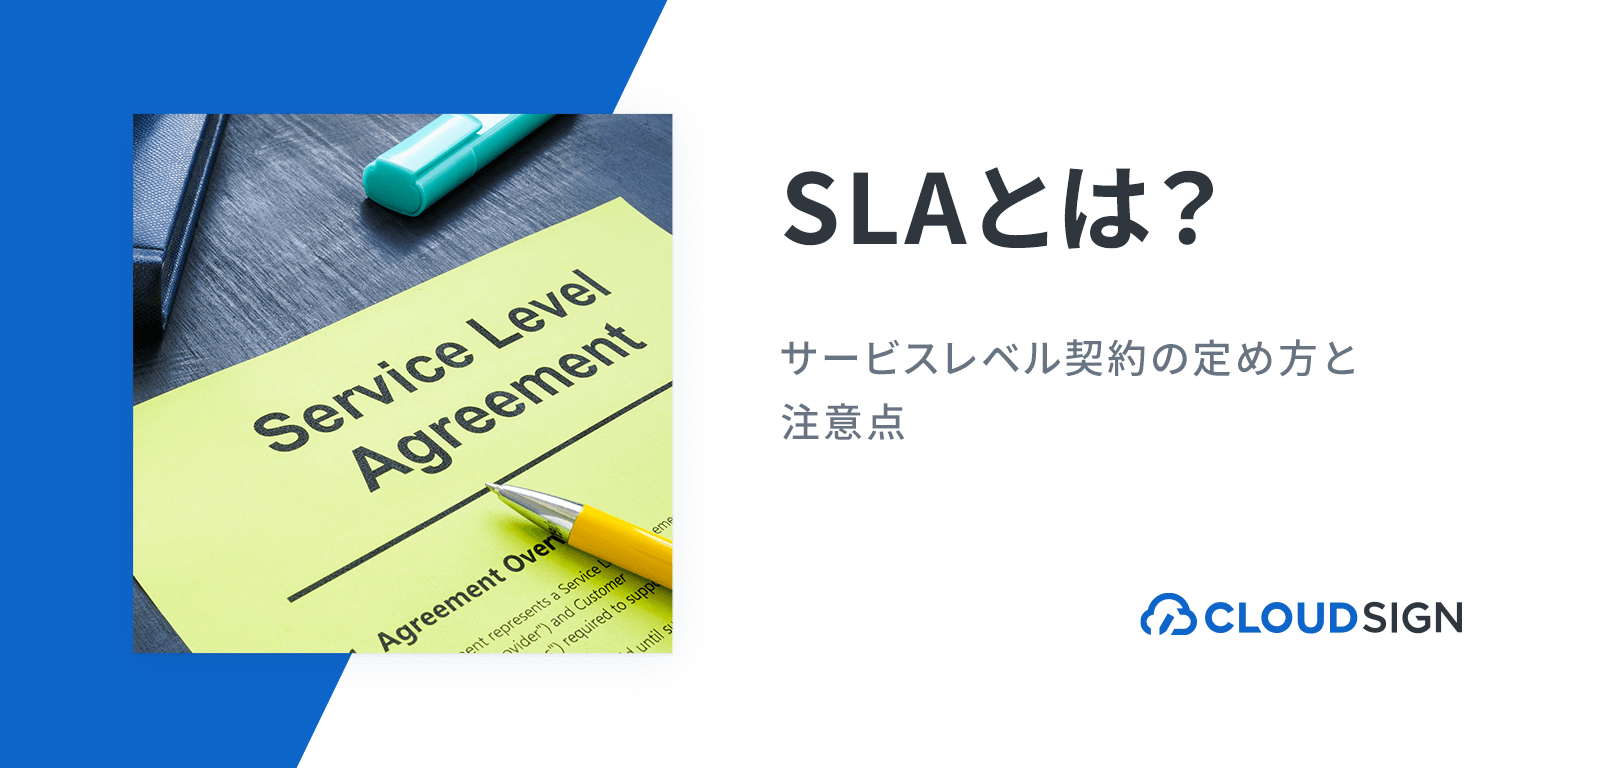 SLA（Service Level Agreement）とは？サービスレベル契約の定め方と注意点